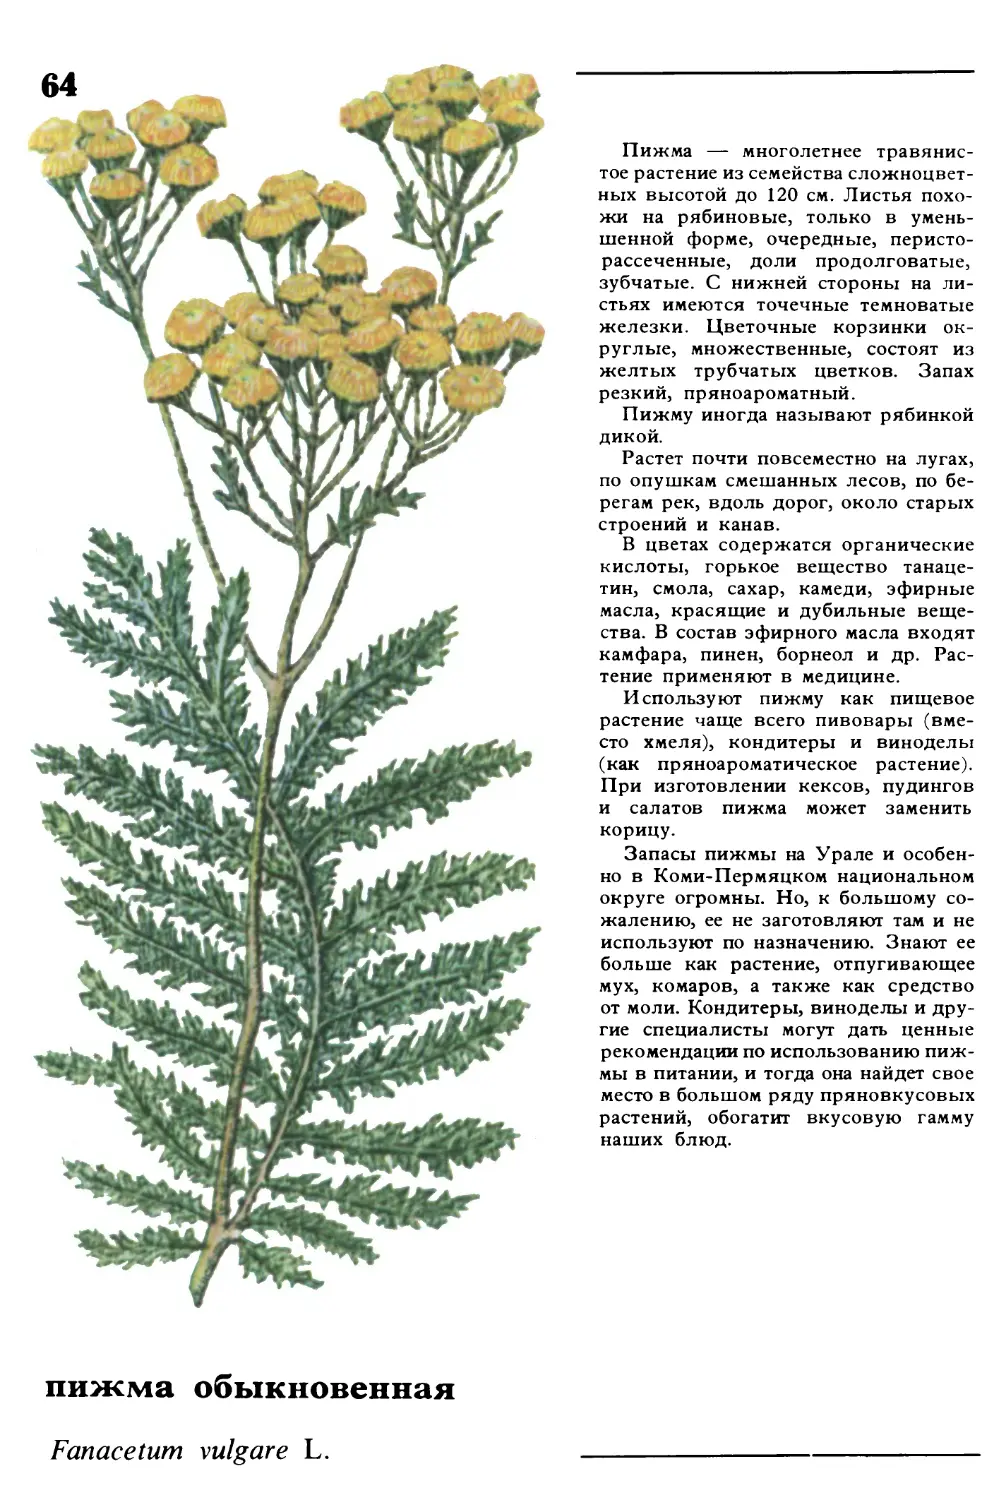 Пижма
пижма обыкновенная
Fanacetum vulgare L.